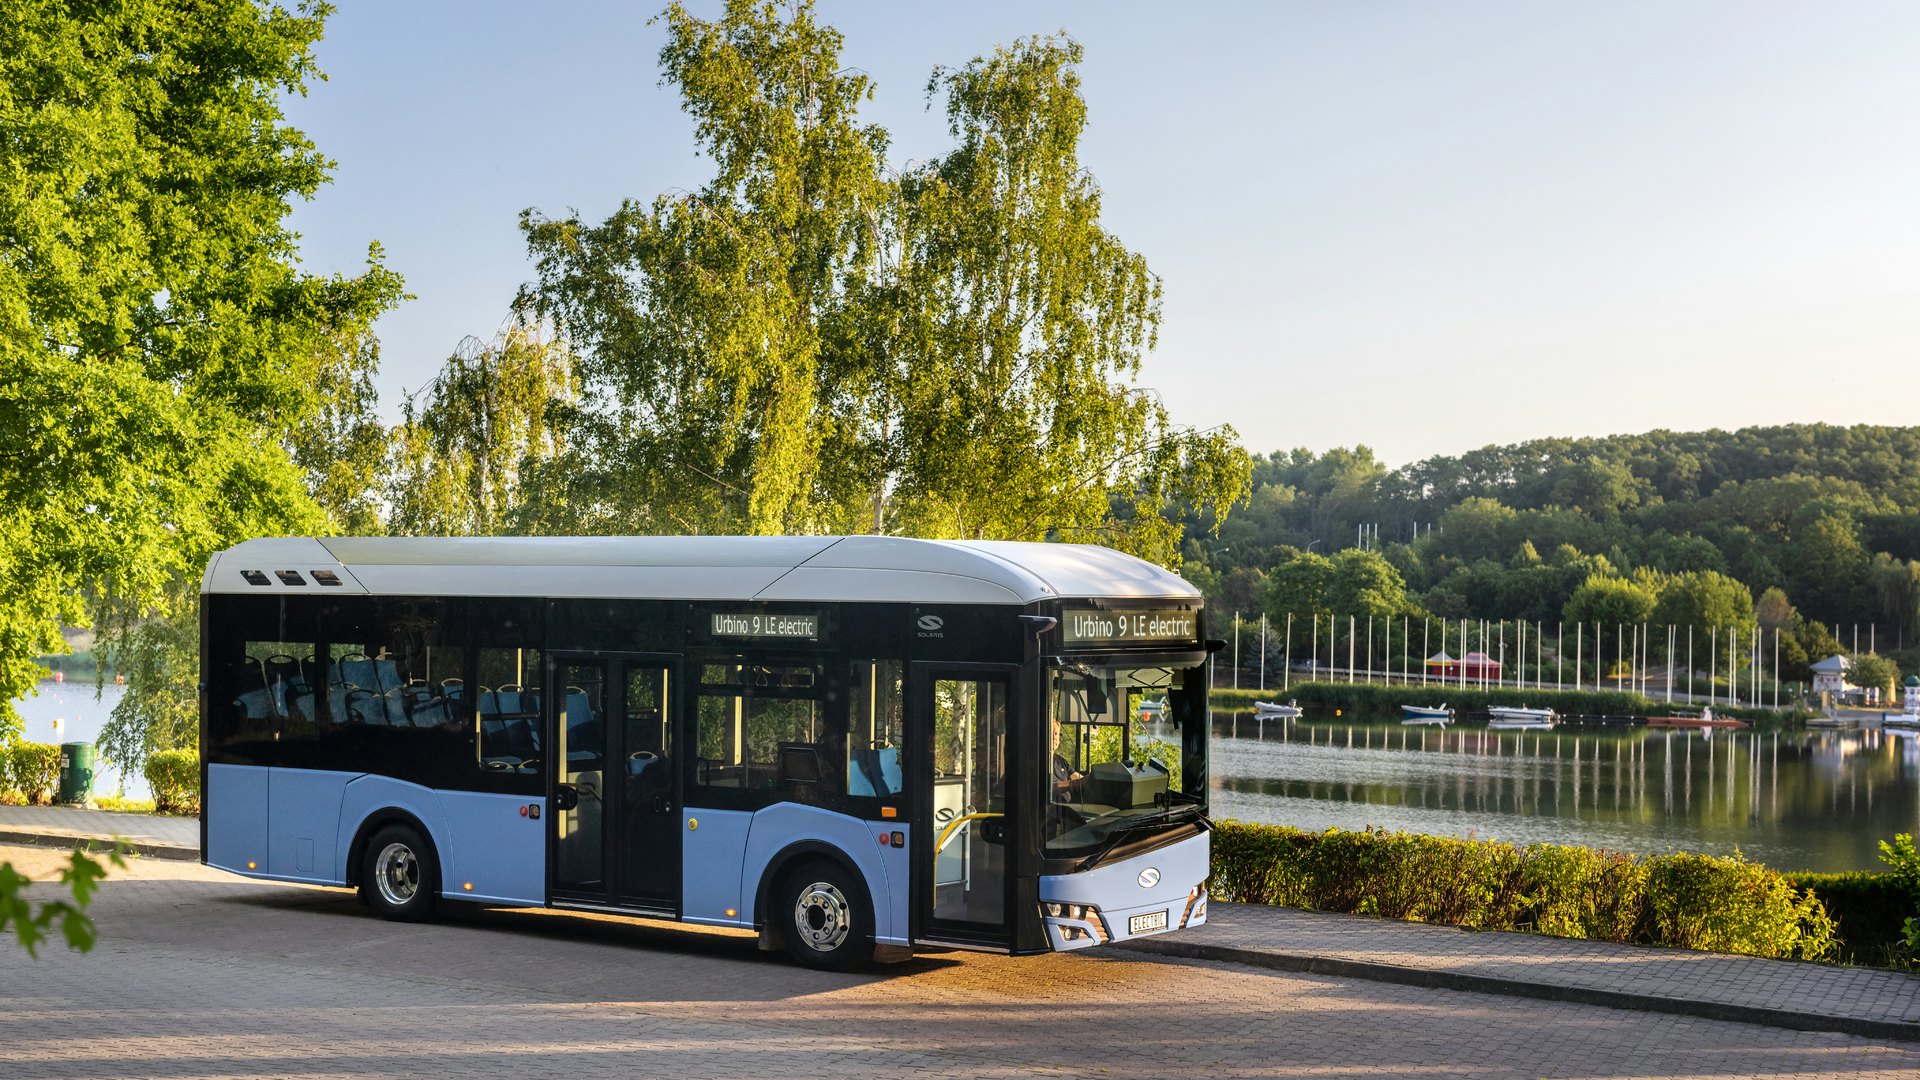 Modern European Electric Bus [PREMIUM]